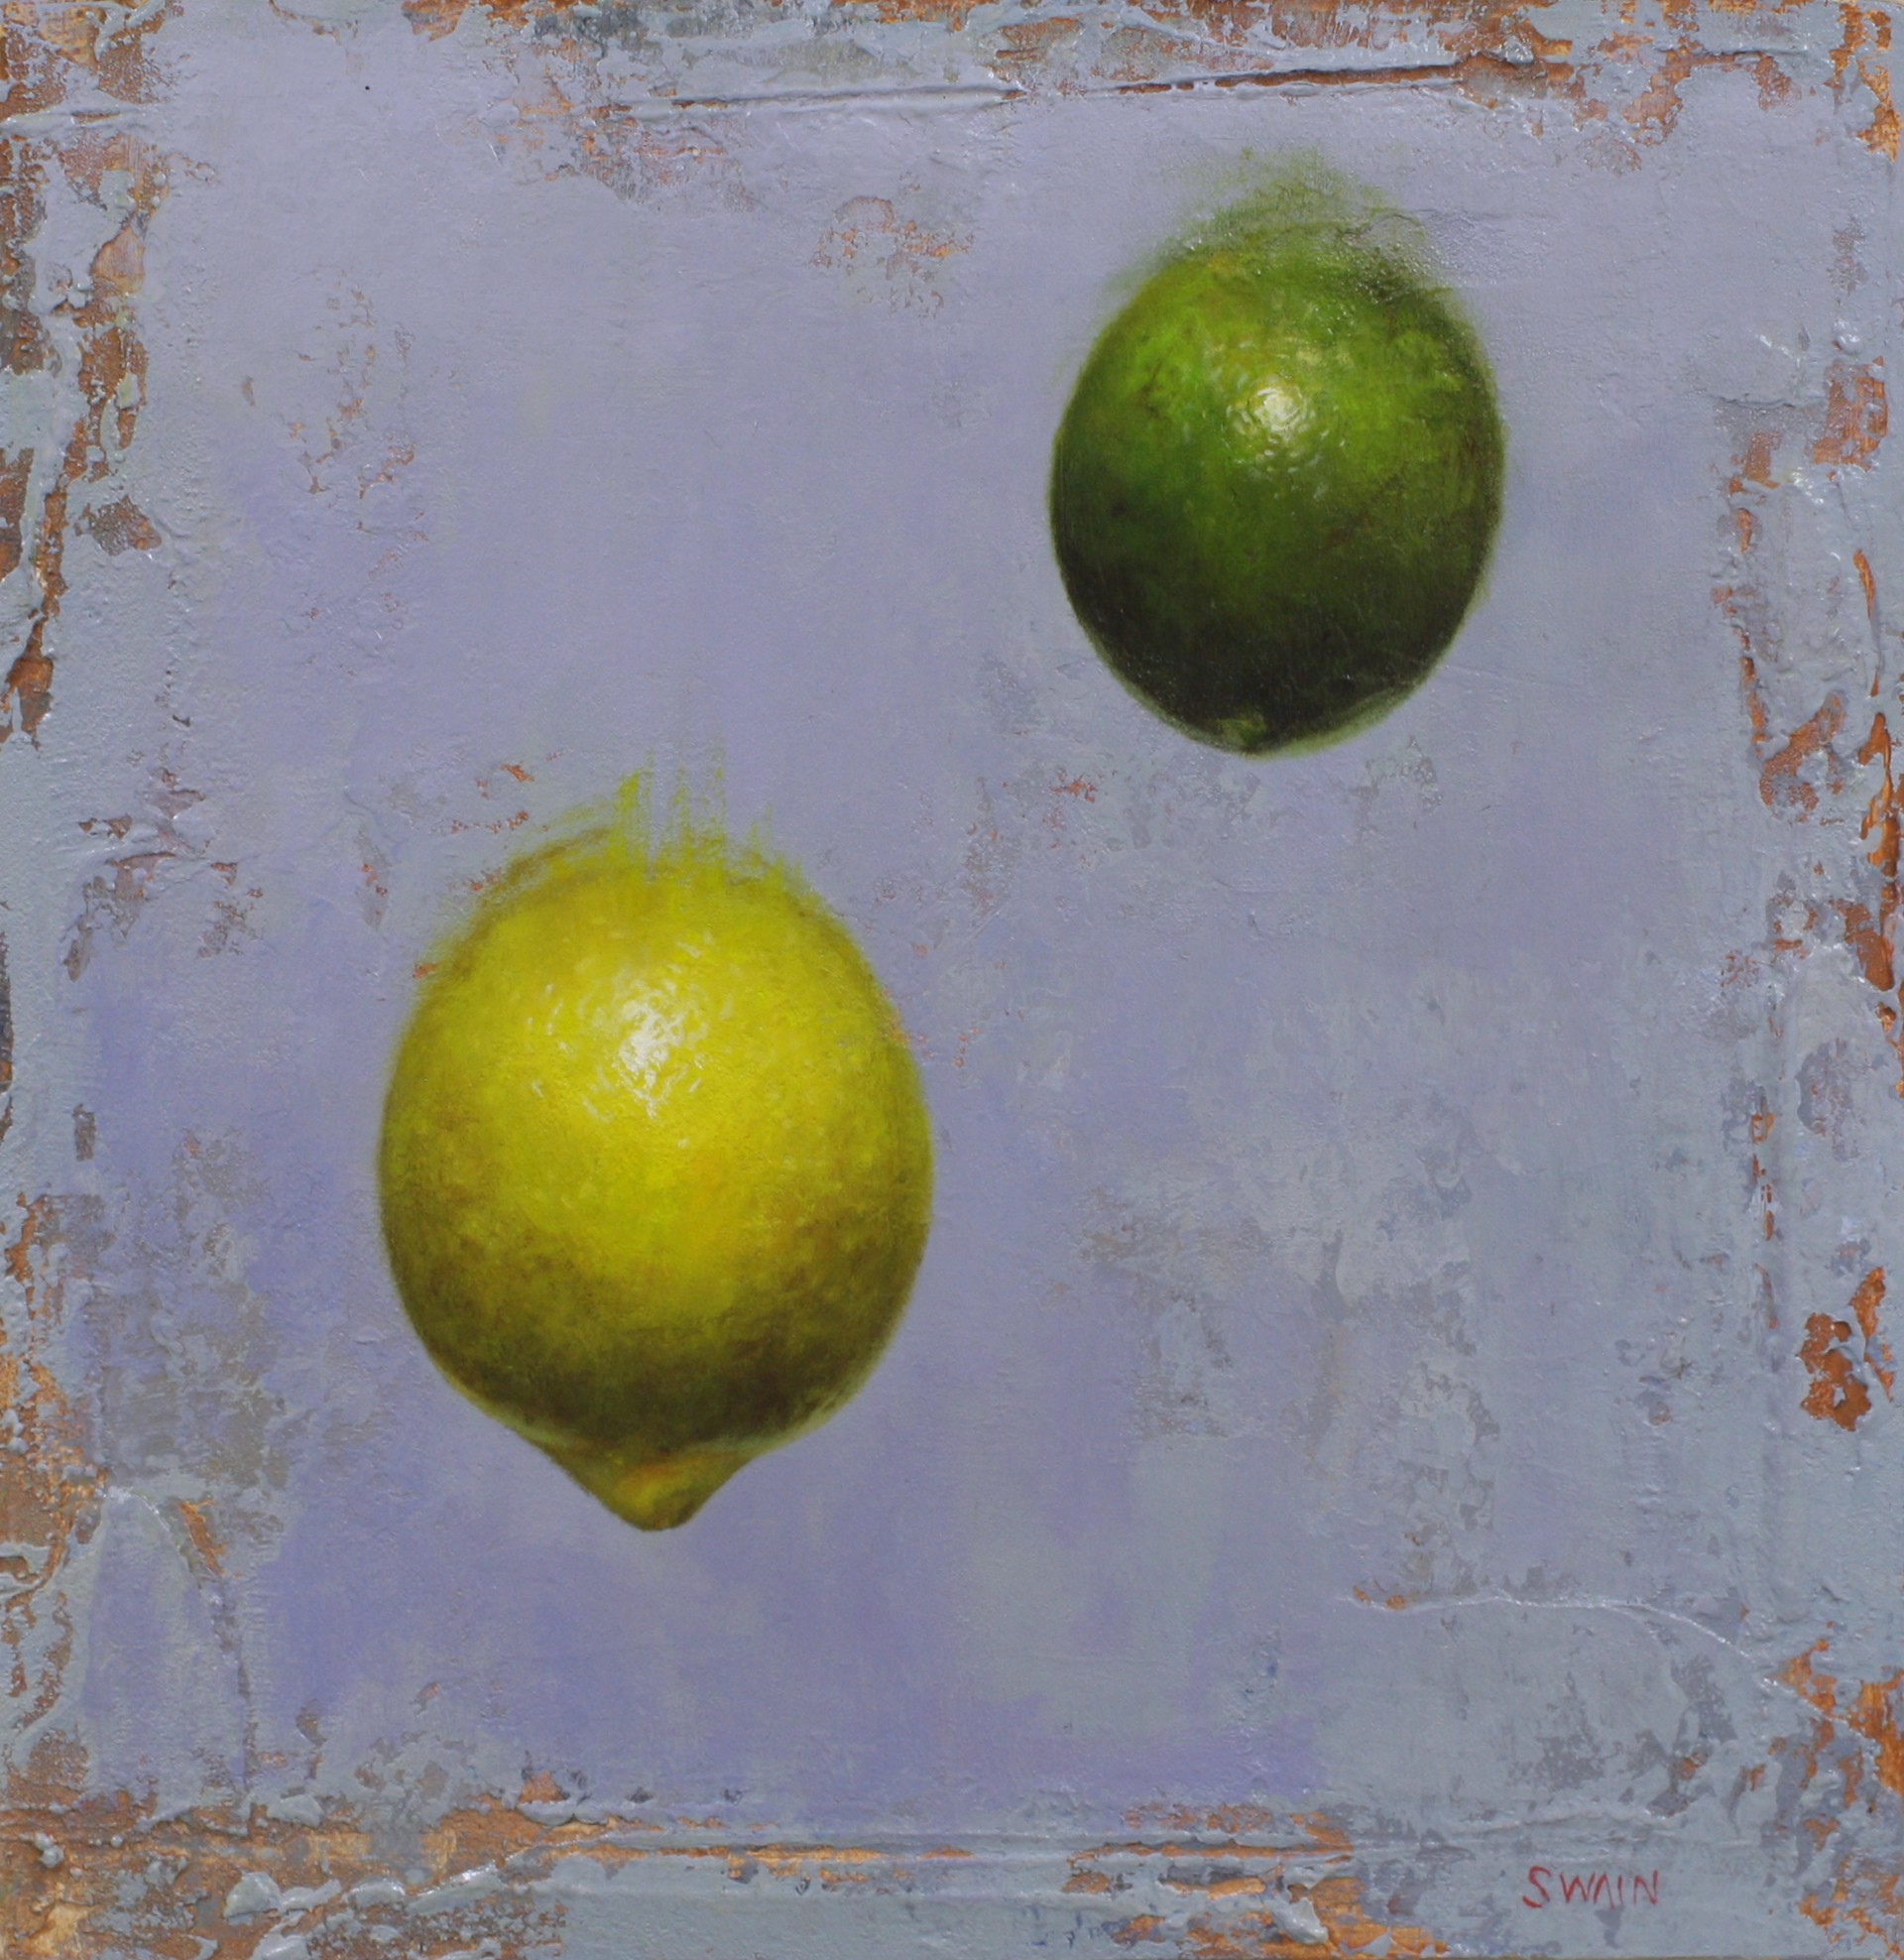 Citrus in Freefall by Tyler Swain